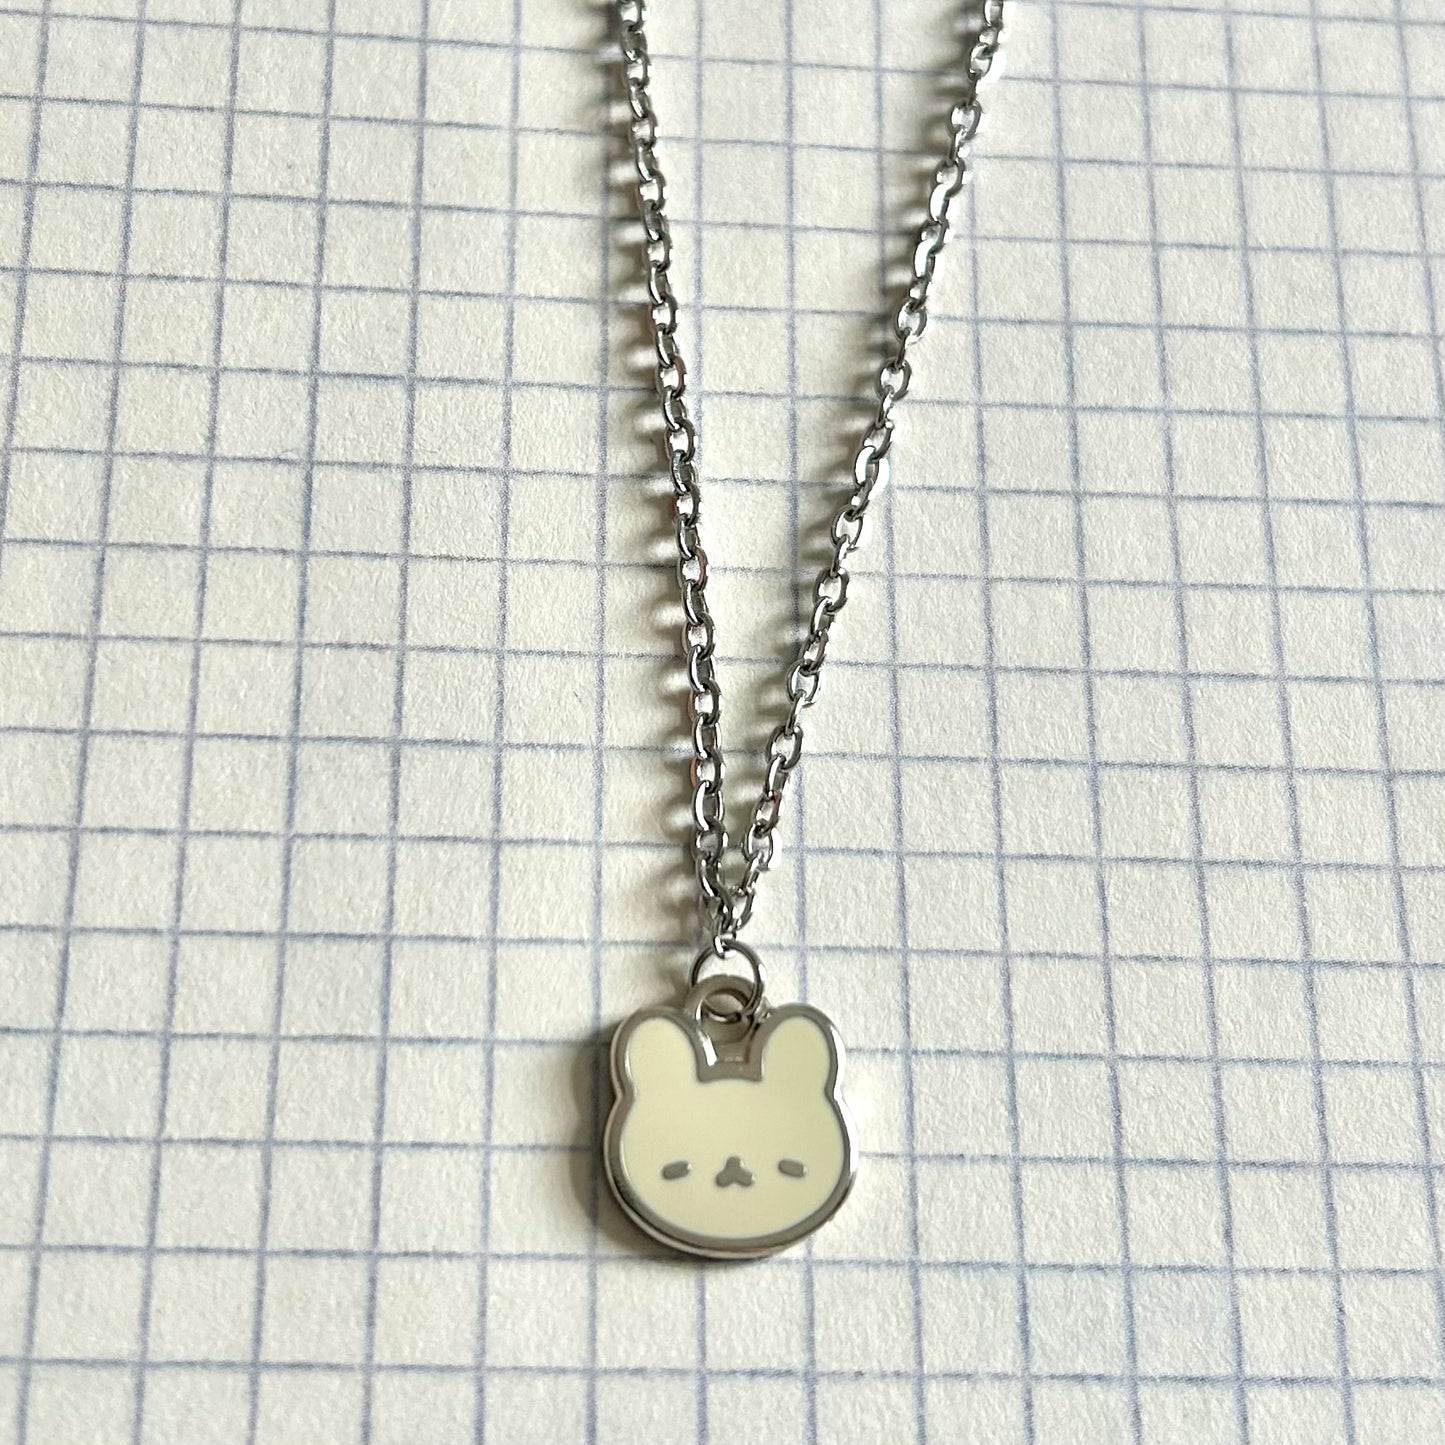 Bunny Necklace ✧･ﾟ: *